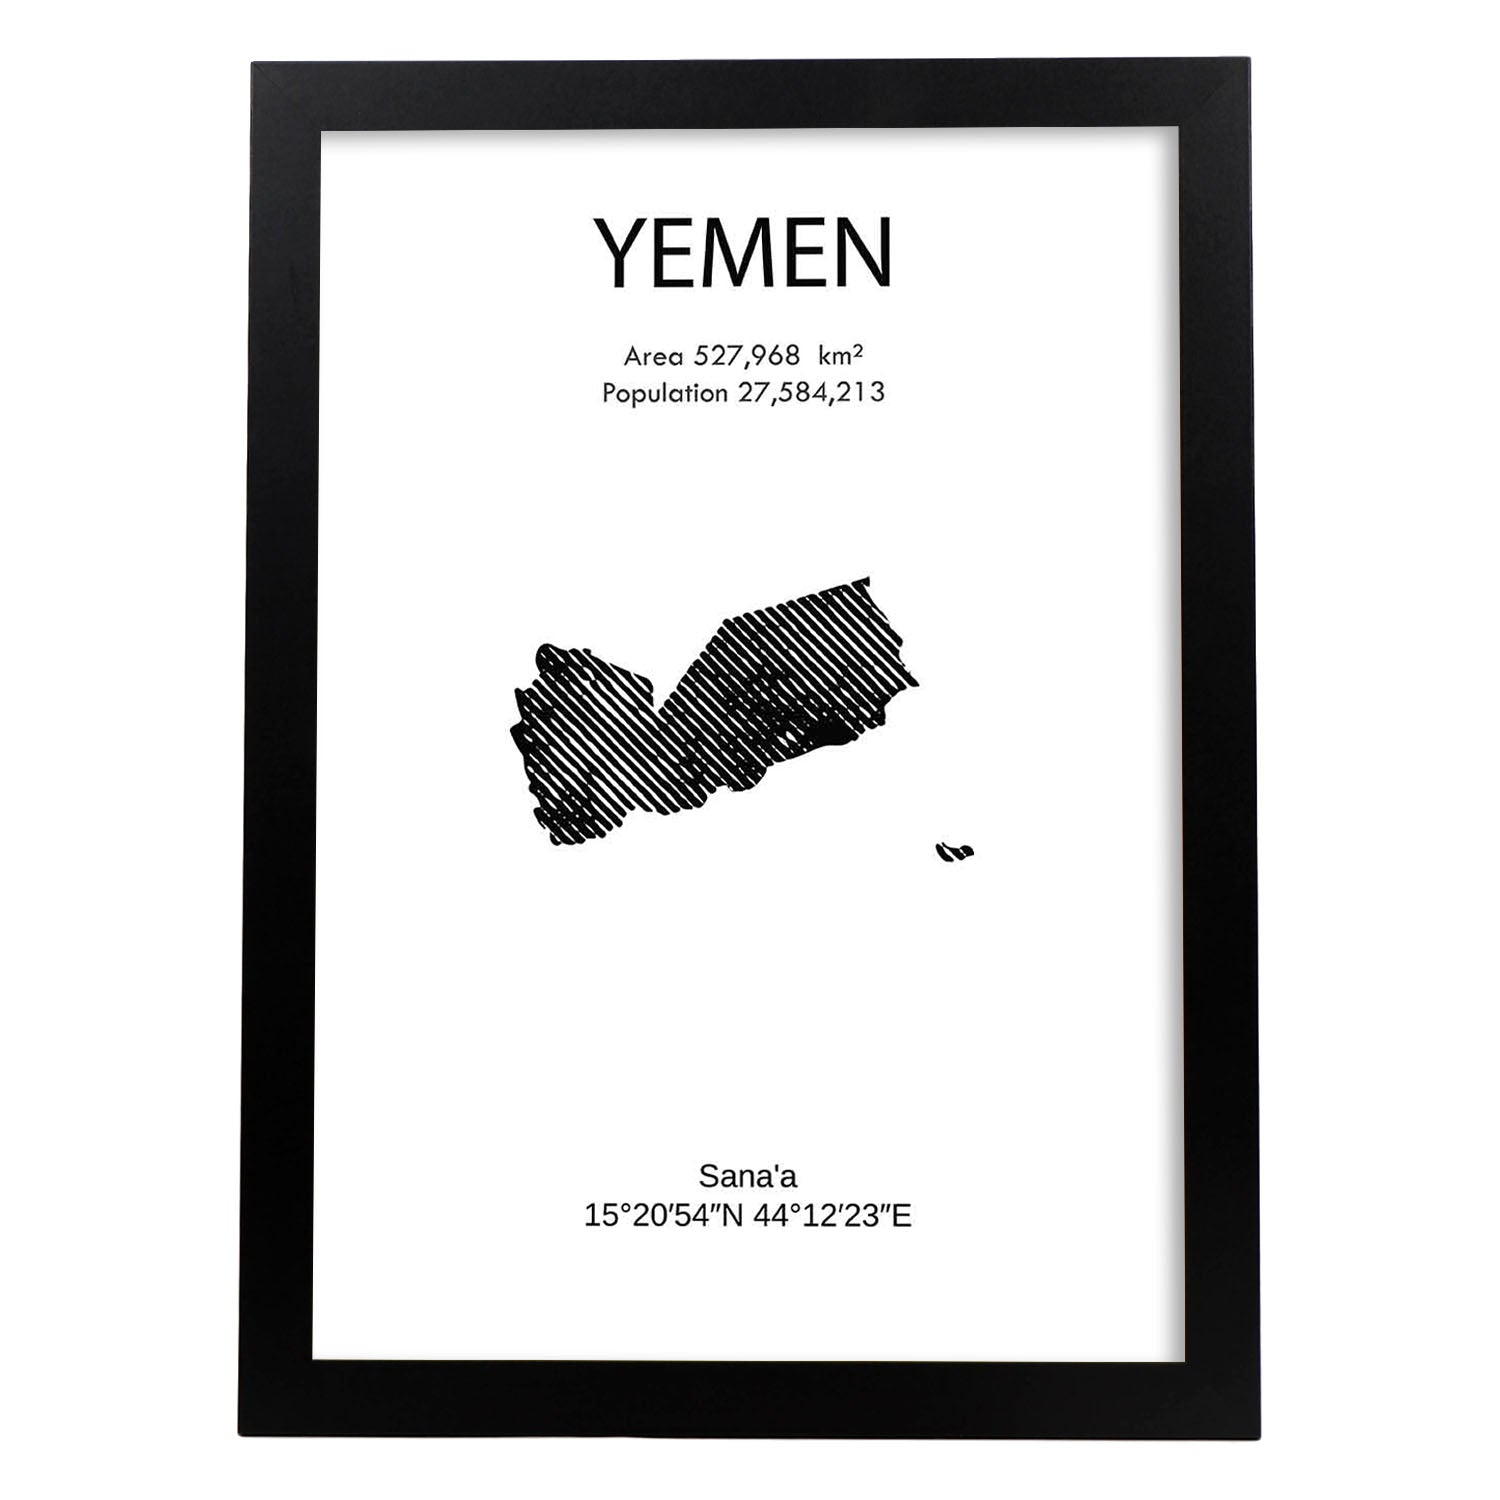 Poster de Yemen. Láminas de paises y continentes del mundo.-Artwork-Nacnic-A4-Marco Negro-Nacnic Estudio SL